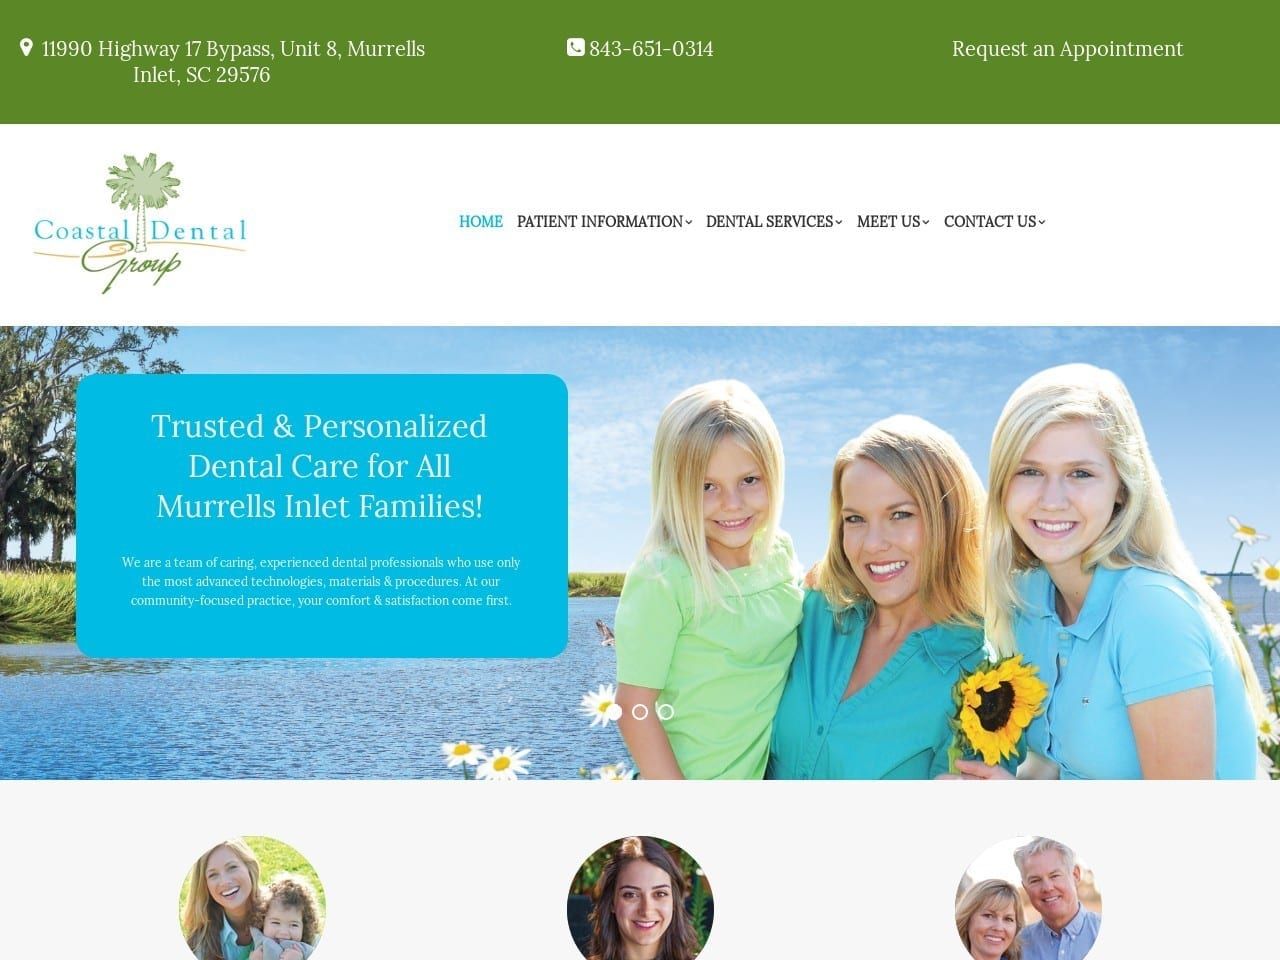 Coastal Dental Group Tiller Bradley DMD Website Screenshot from coastaldentalgroup.net